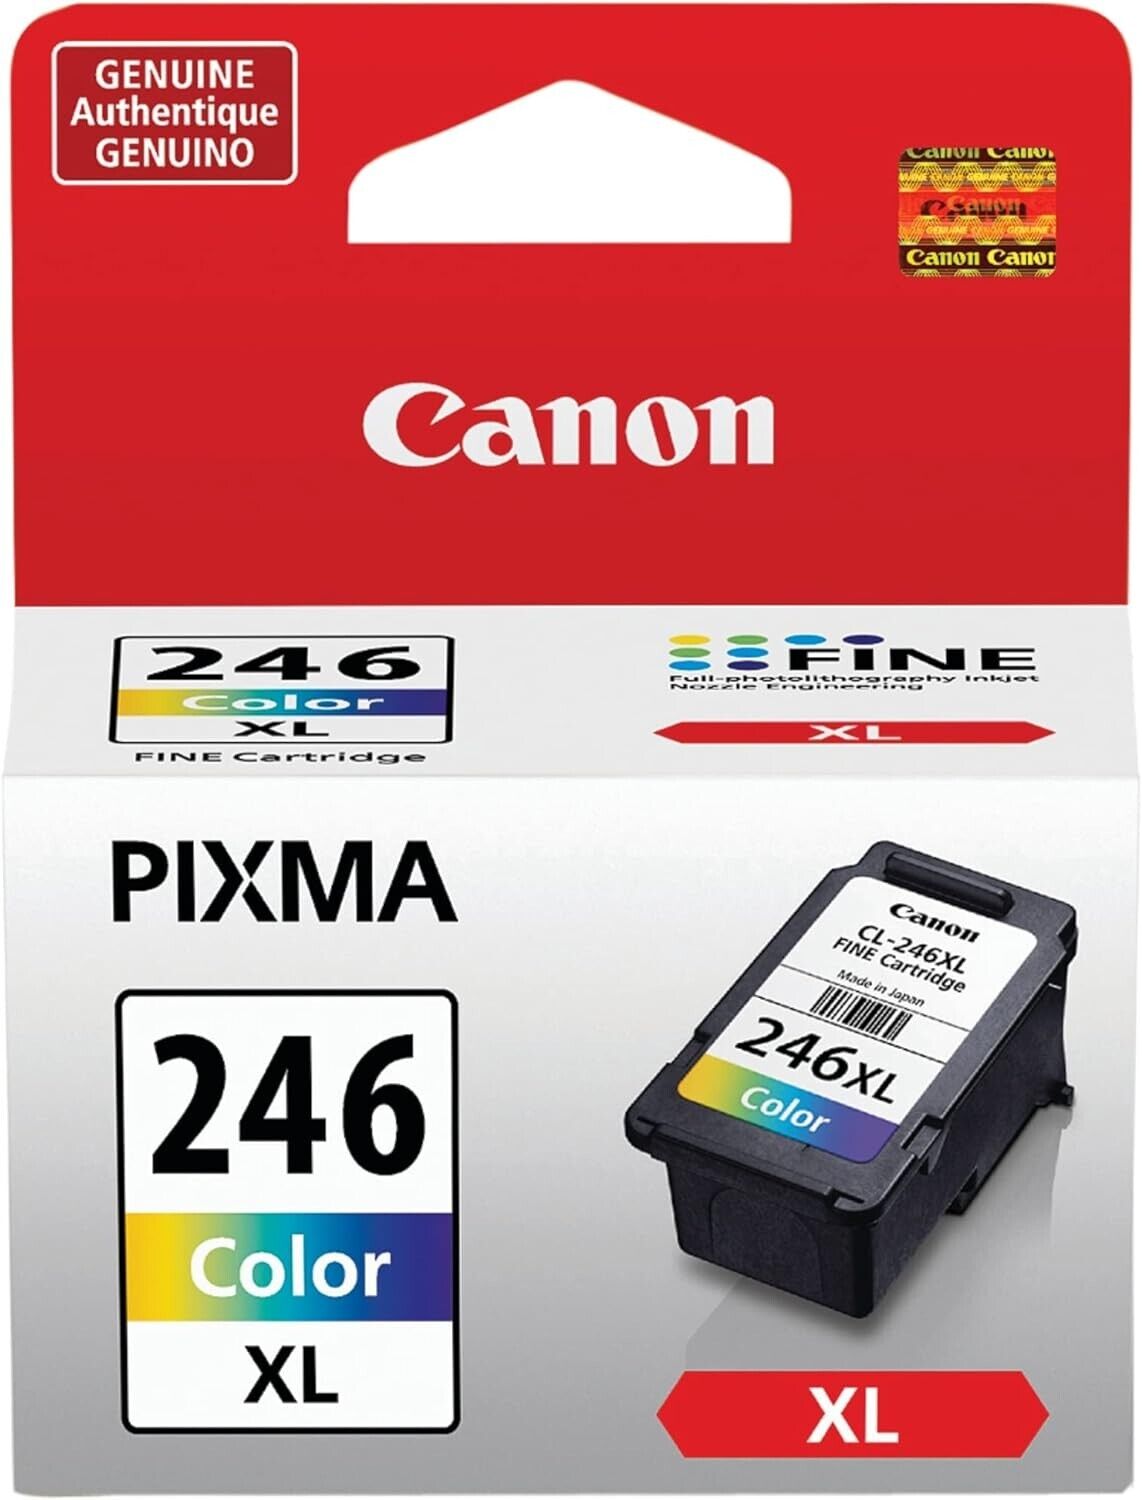 Canon Pixma 246 XL Ink Cartridge Color New SEALED OEM Original Genuine CL-246XL